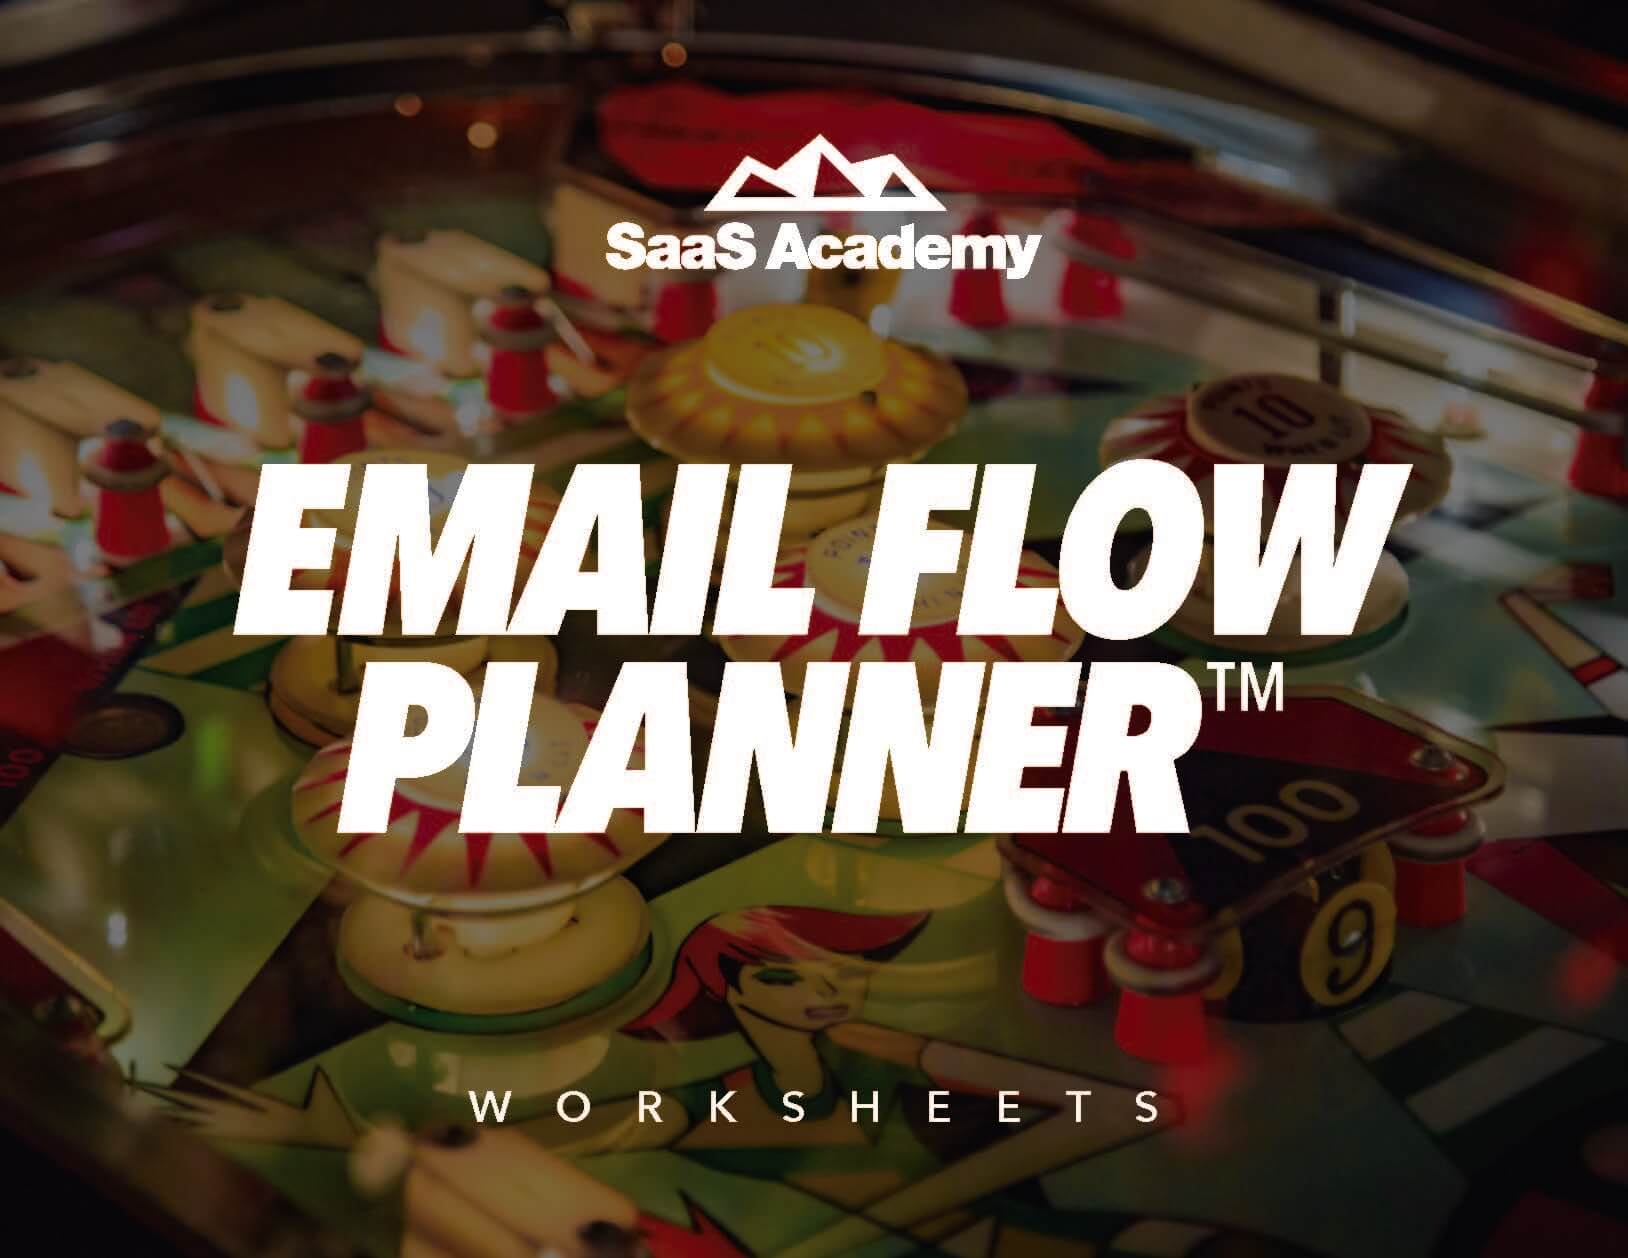 Worksheet - Email Flow Planner